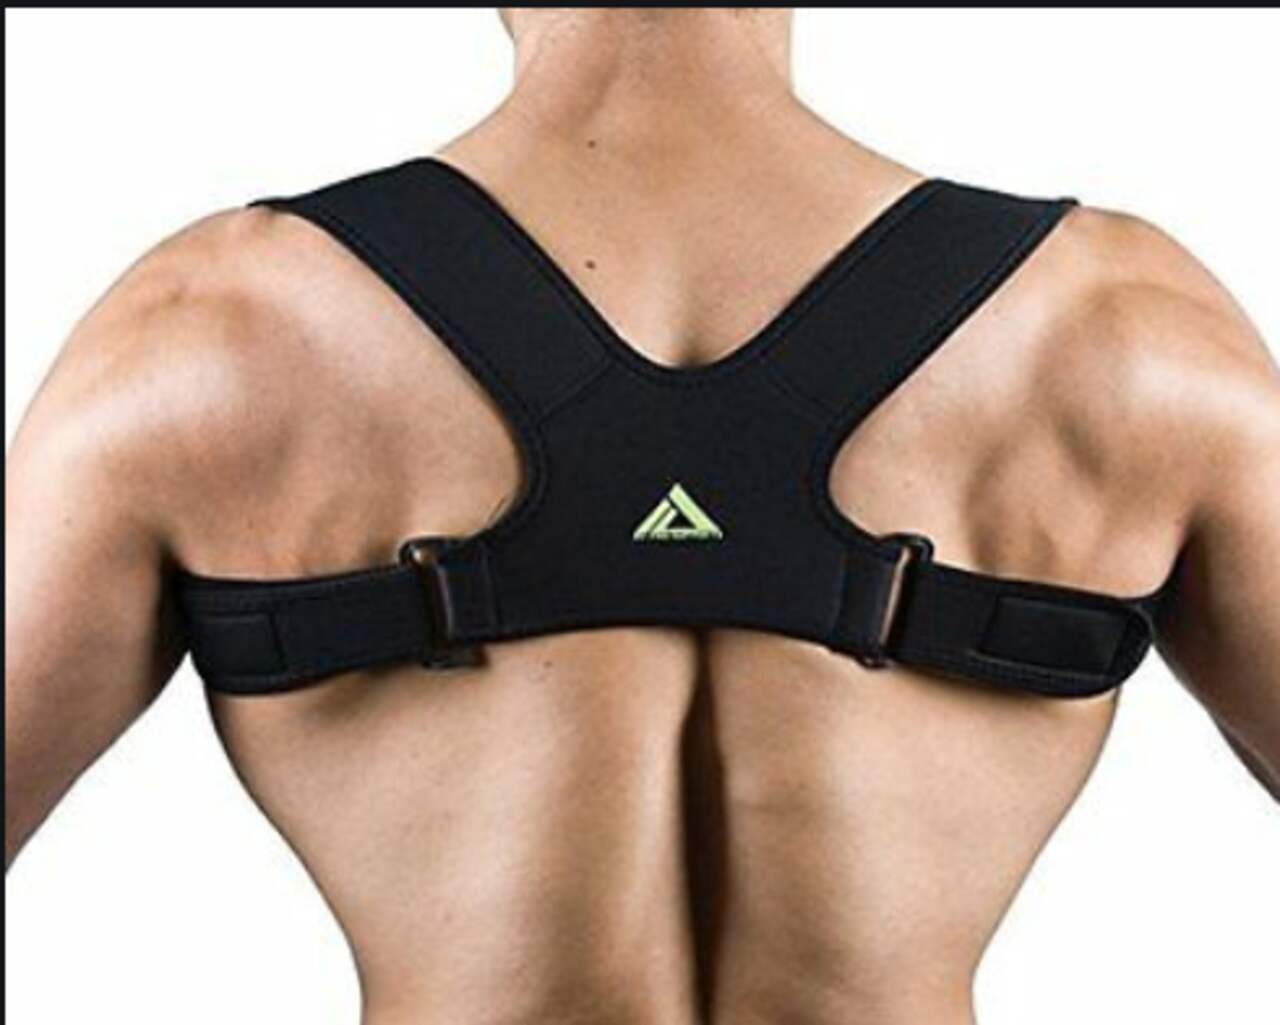 Unigear Back Brace Posture Corrector with Adjustable Straps for Unisex